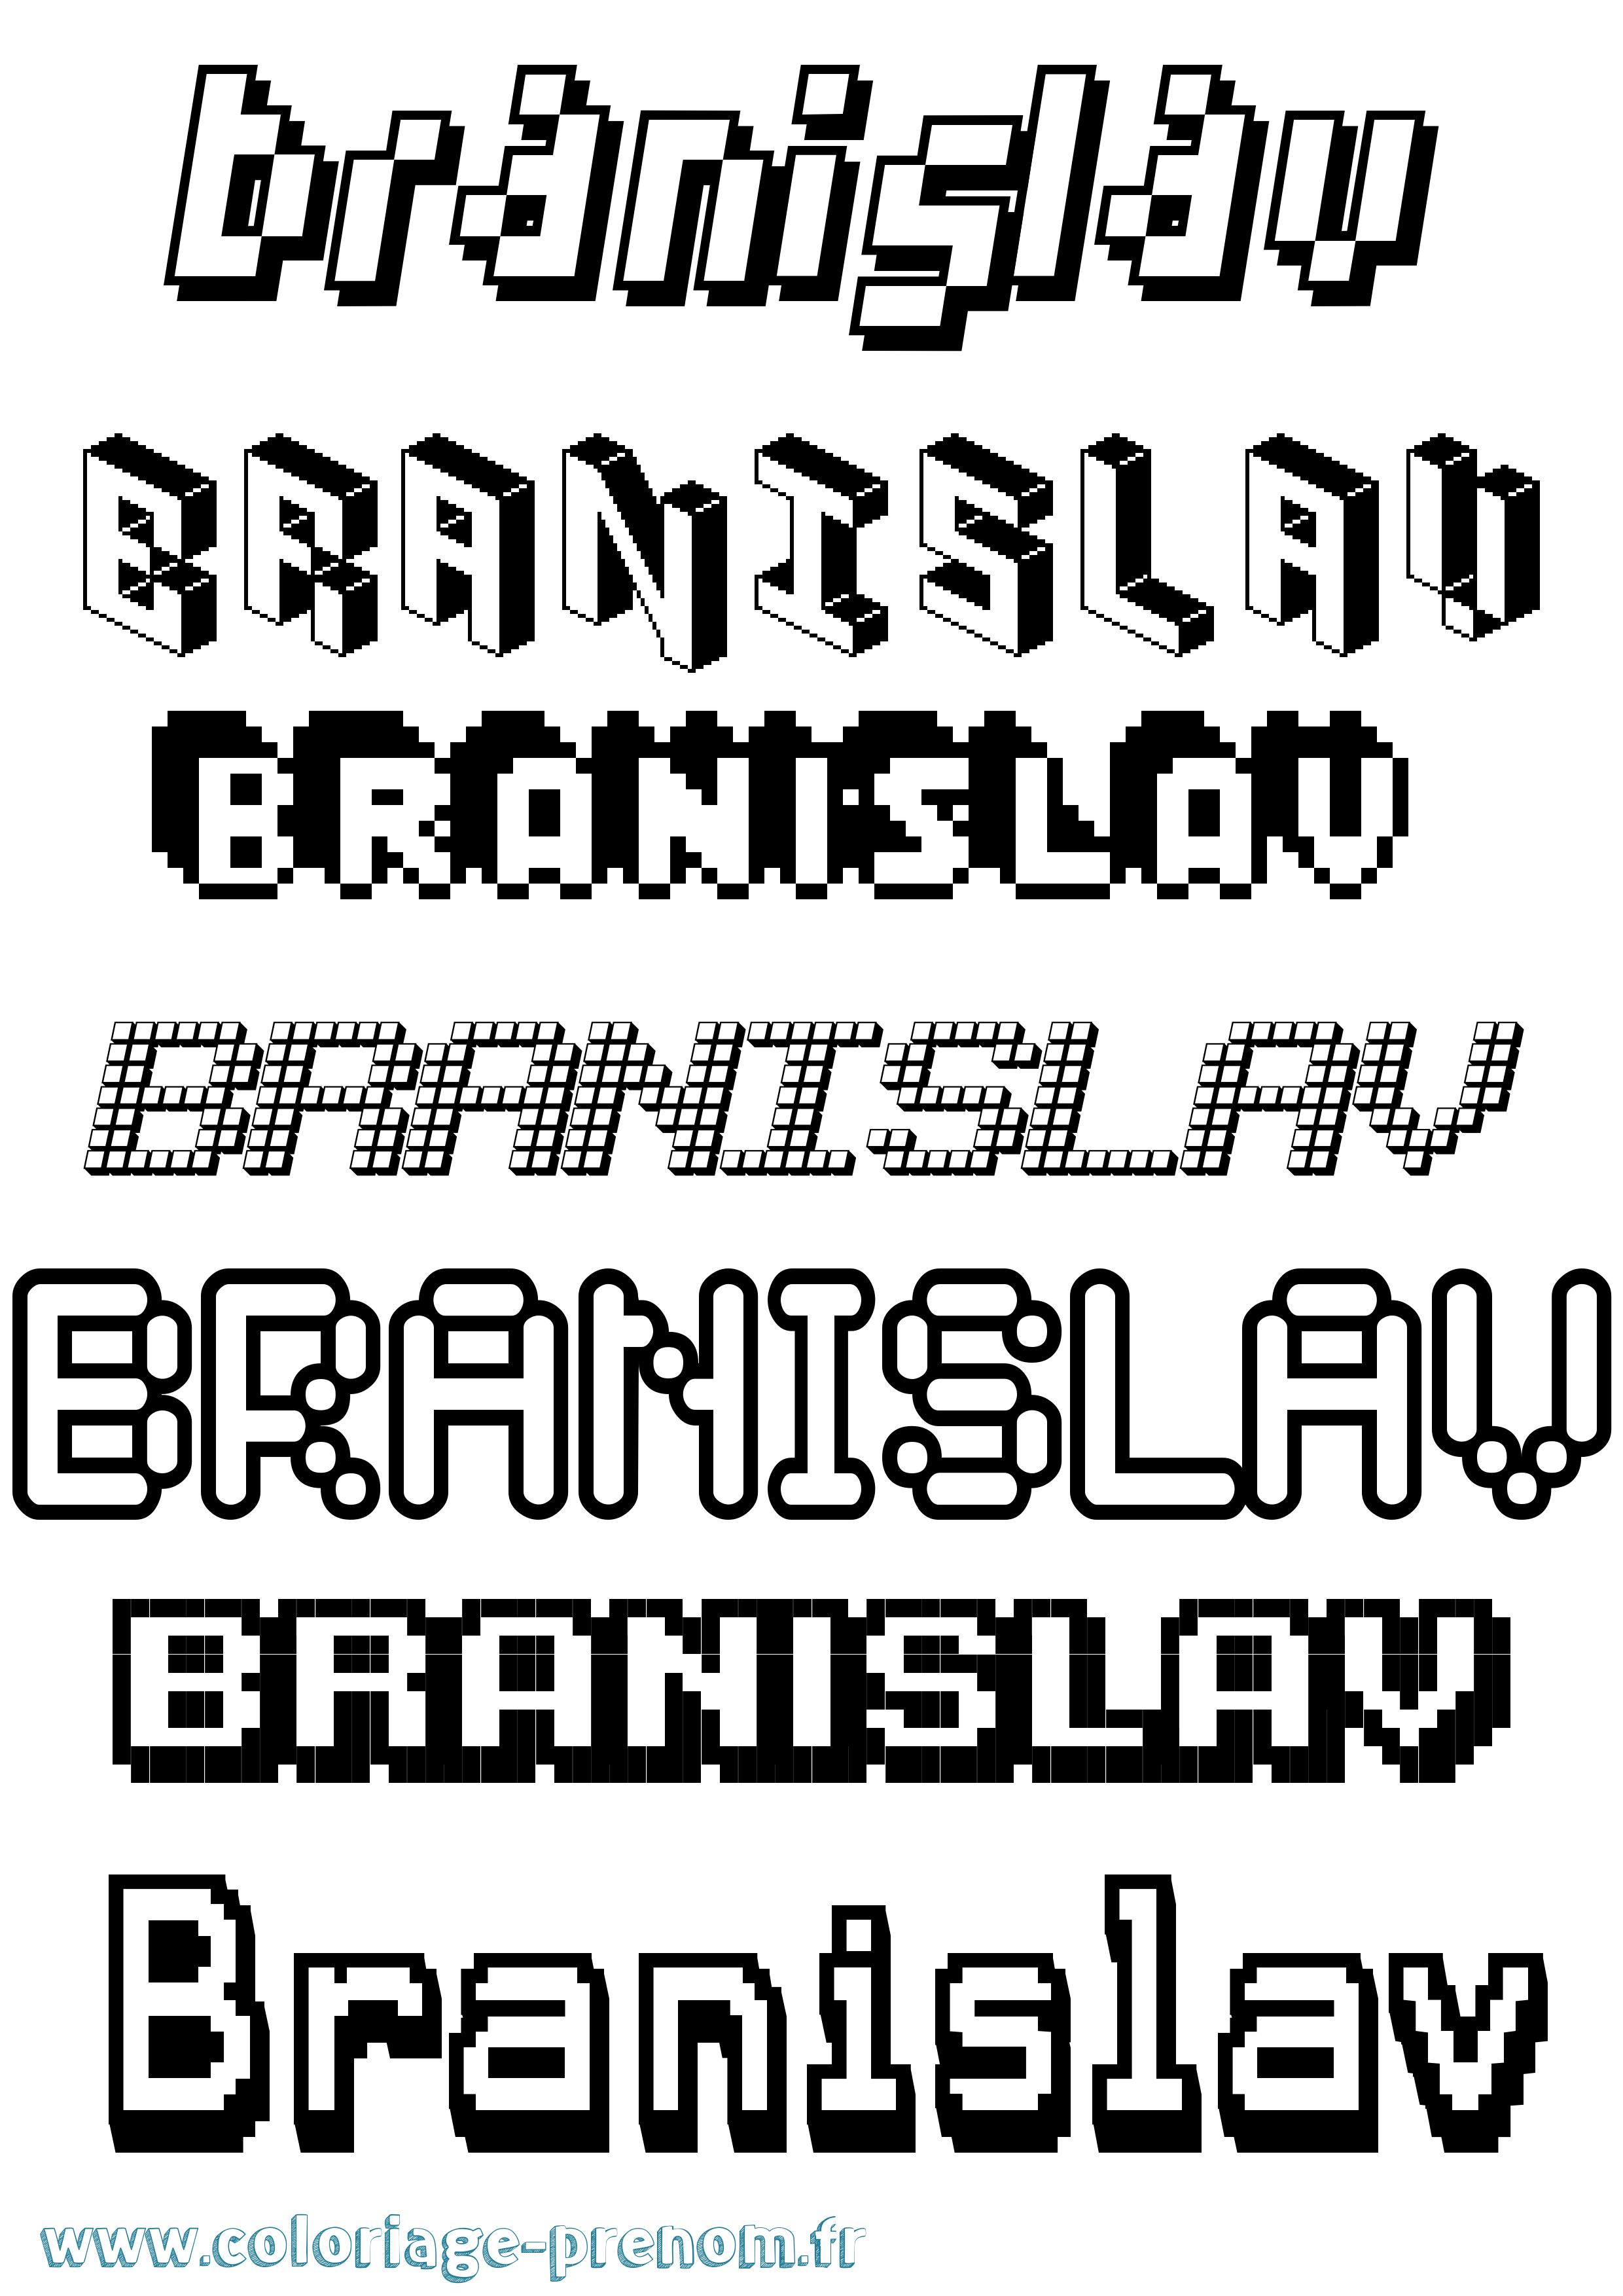 Coloriage prénom Branislav Pixel